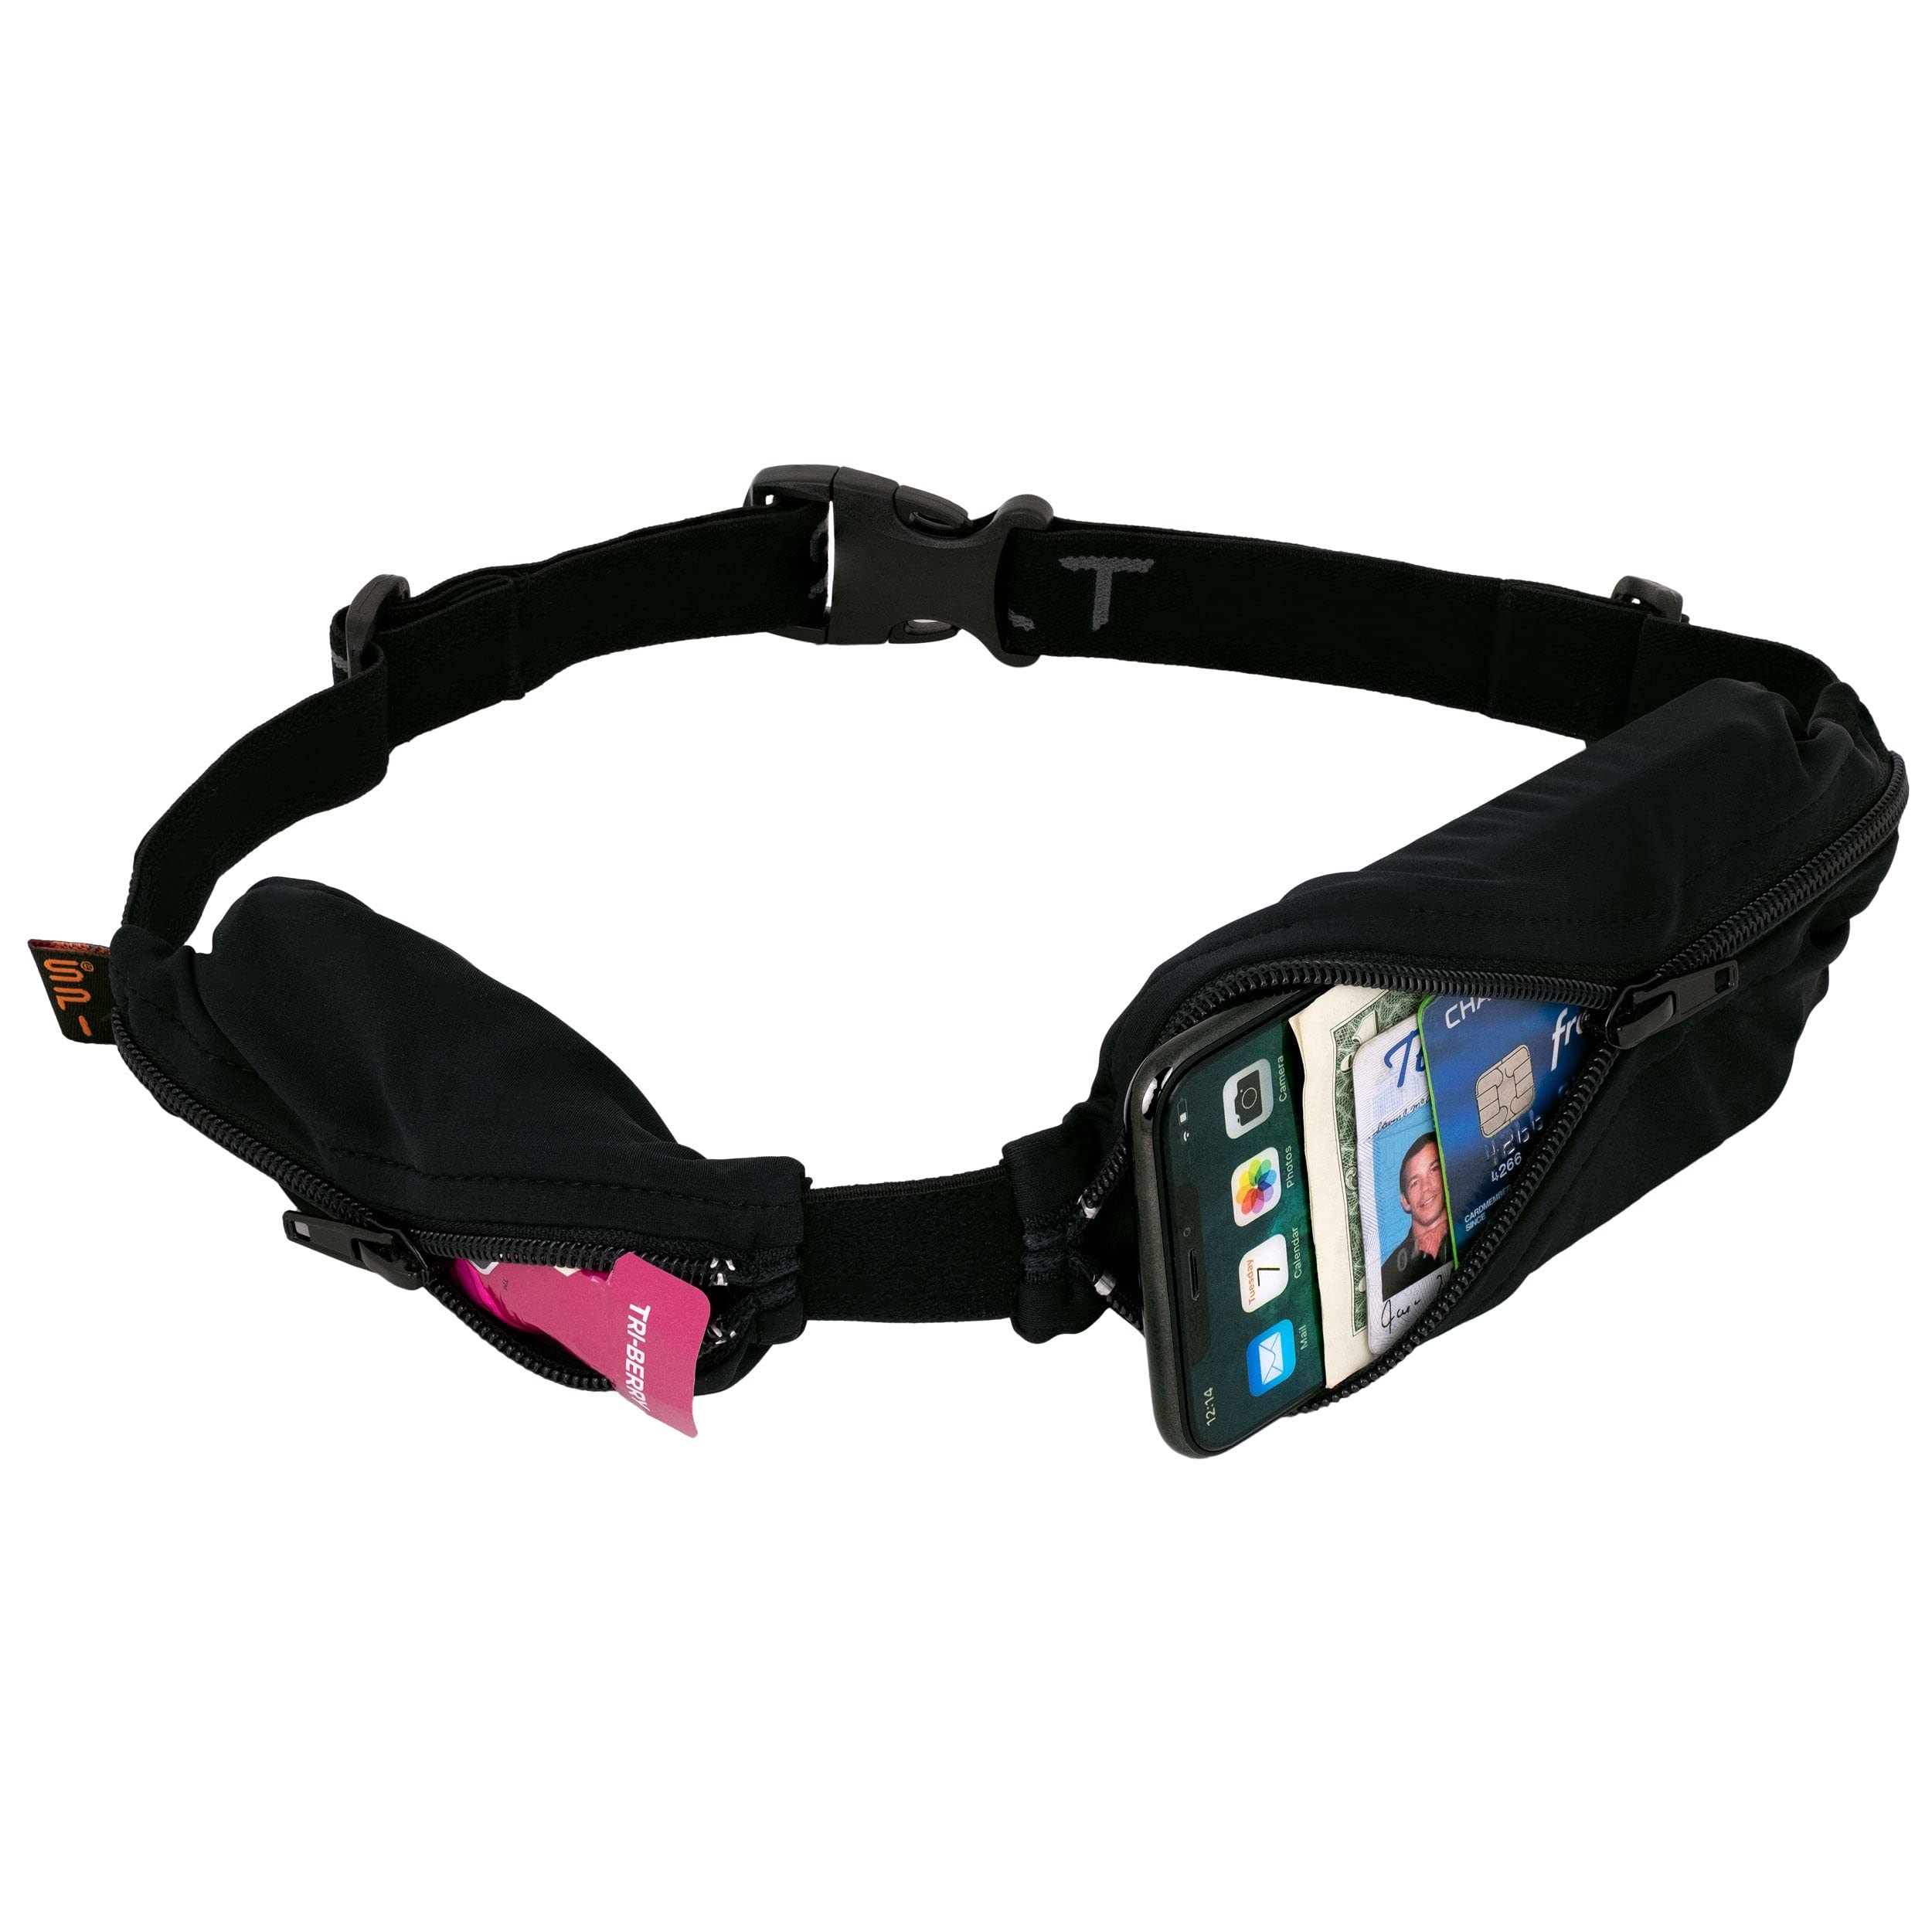 SPIbelt Double Pocket Running Belt for Adults, Expandable Pockets, Adjustable Waist, No Bounce, Black with Black Zipper